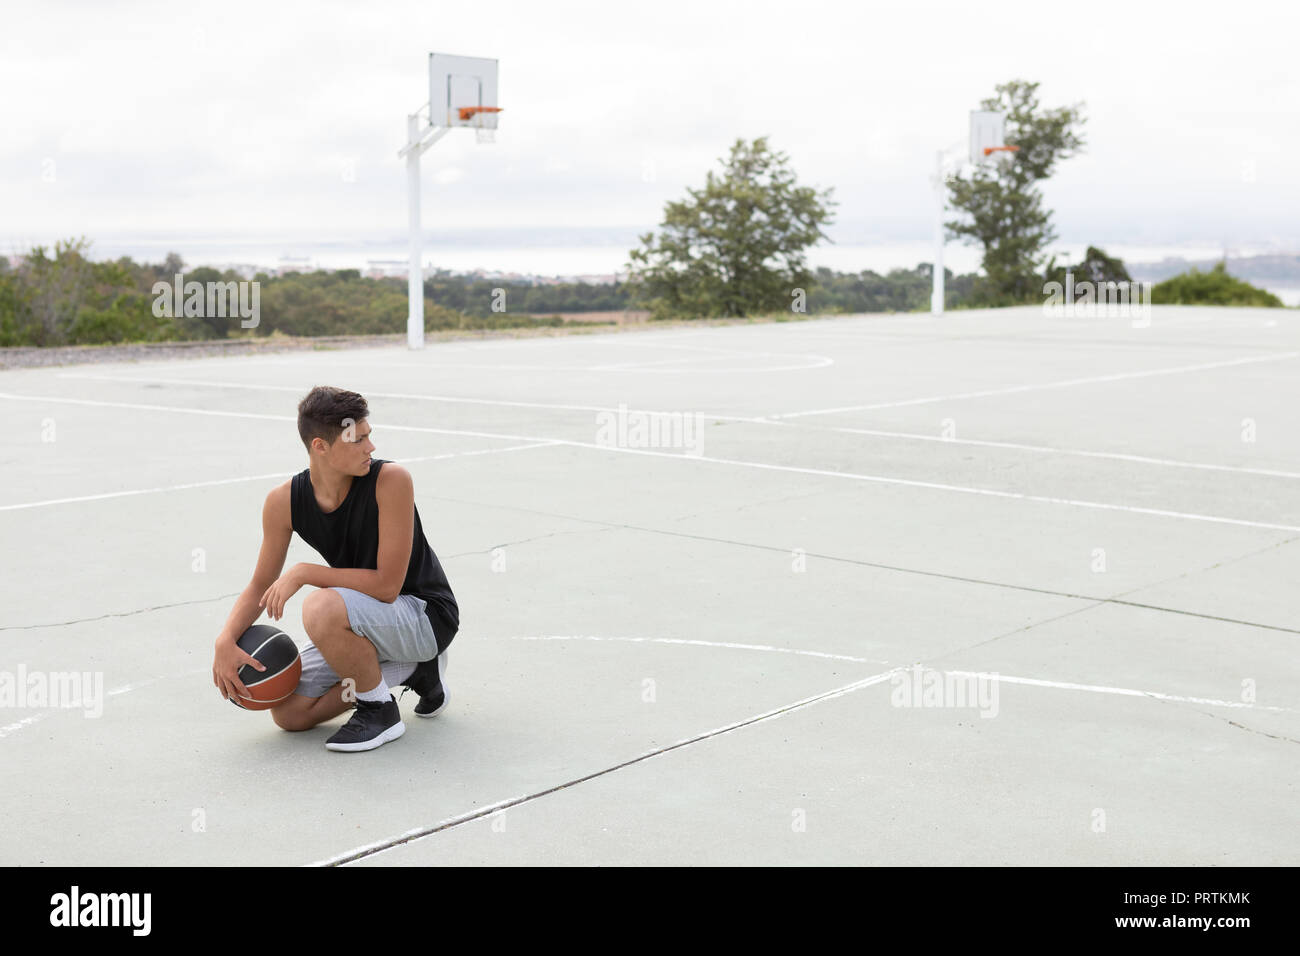 Male teenage basketball player crouching with ball on basketball court Stock Photo